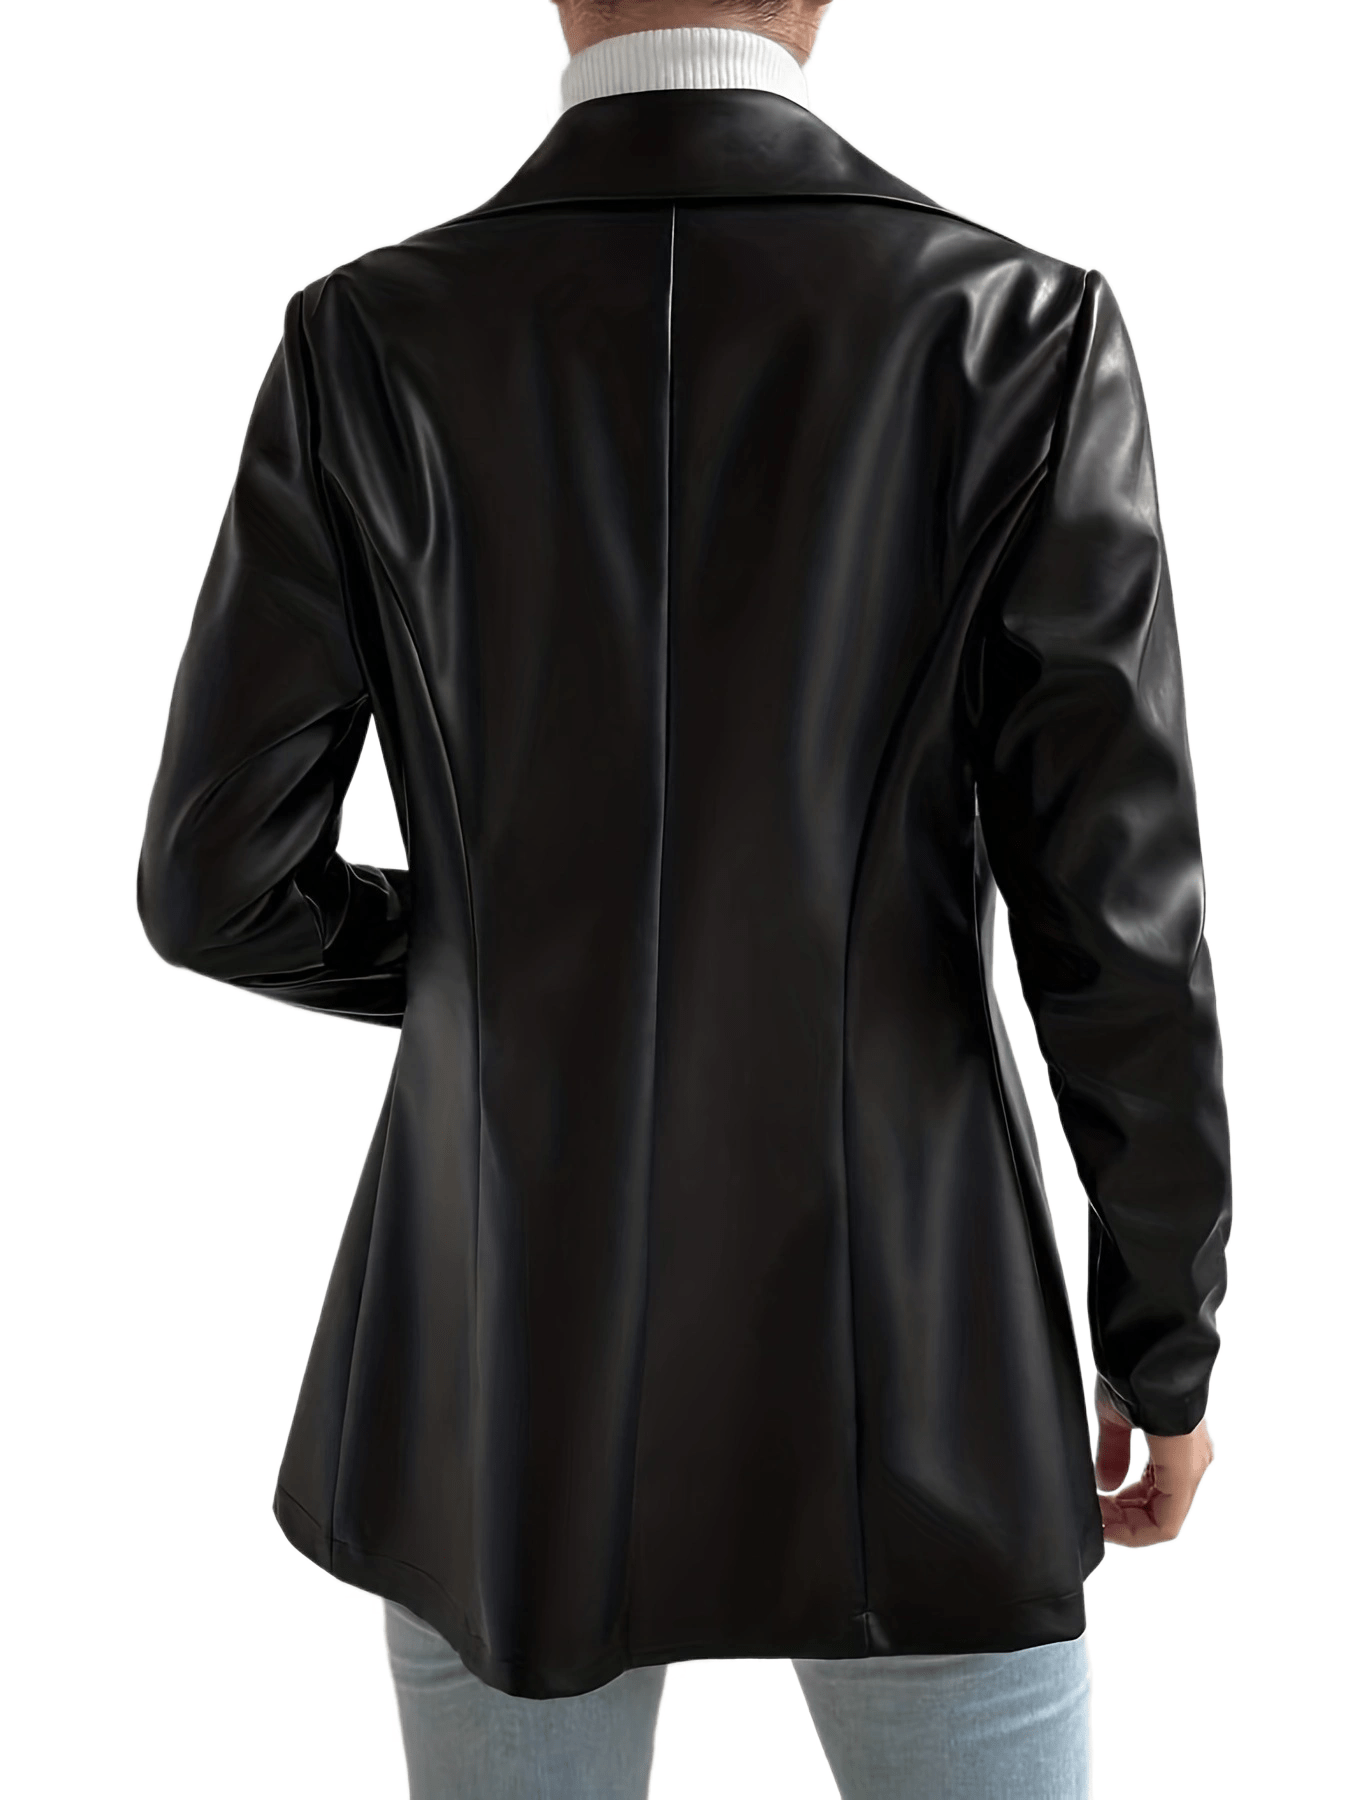 Antmvs One Button PU Jacket, Elegant Lapel Open Front Long Sleeve Outerwear, Women's Clothing